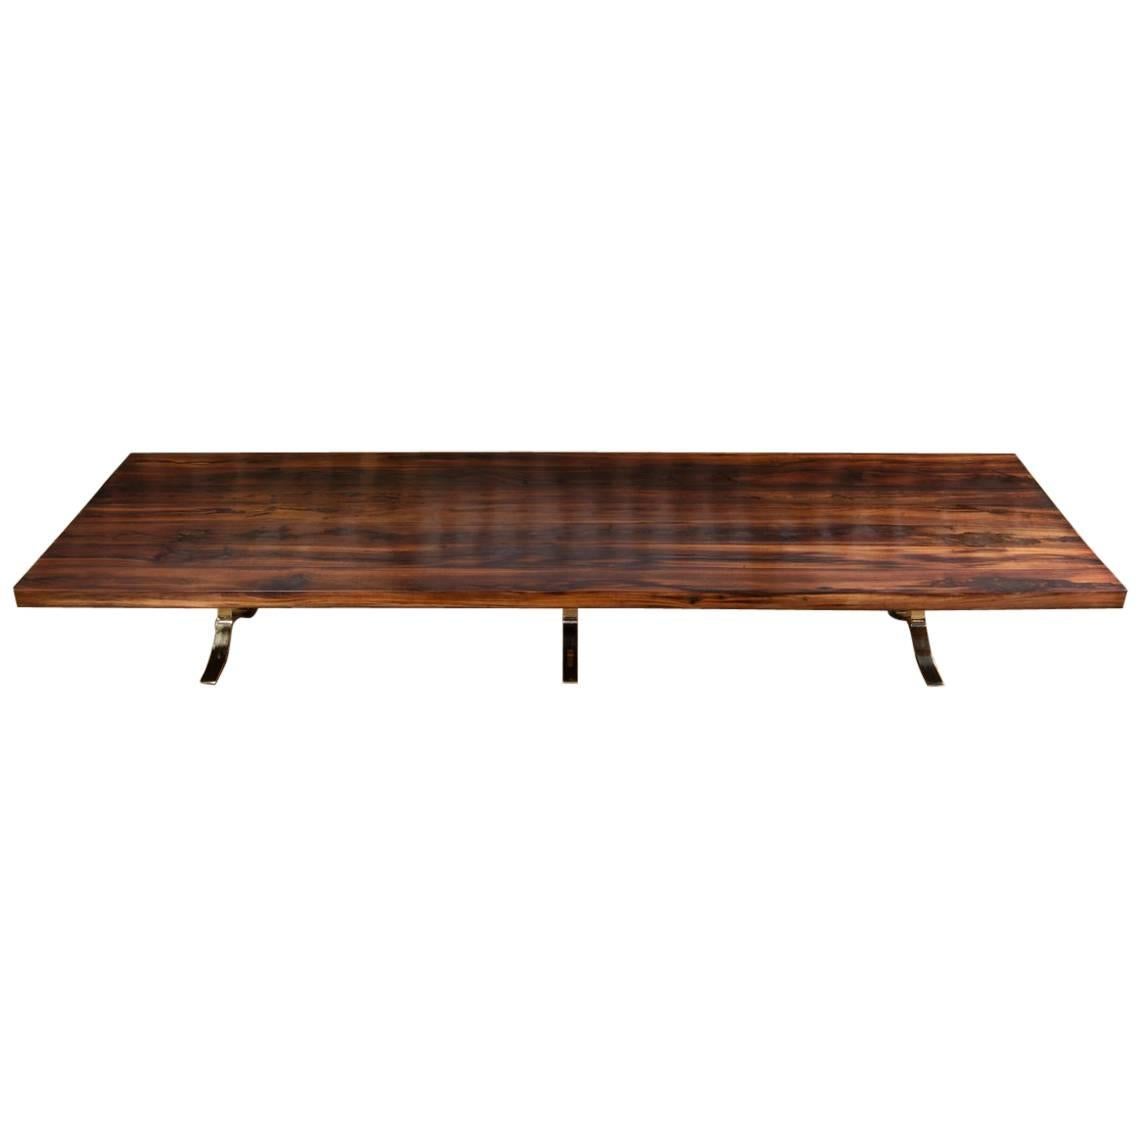 Bespoke Reclaimed Hardwood Table, by P. Tendercool For Sale